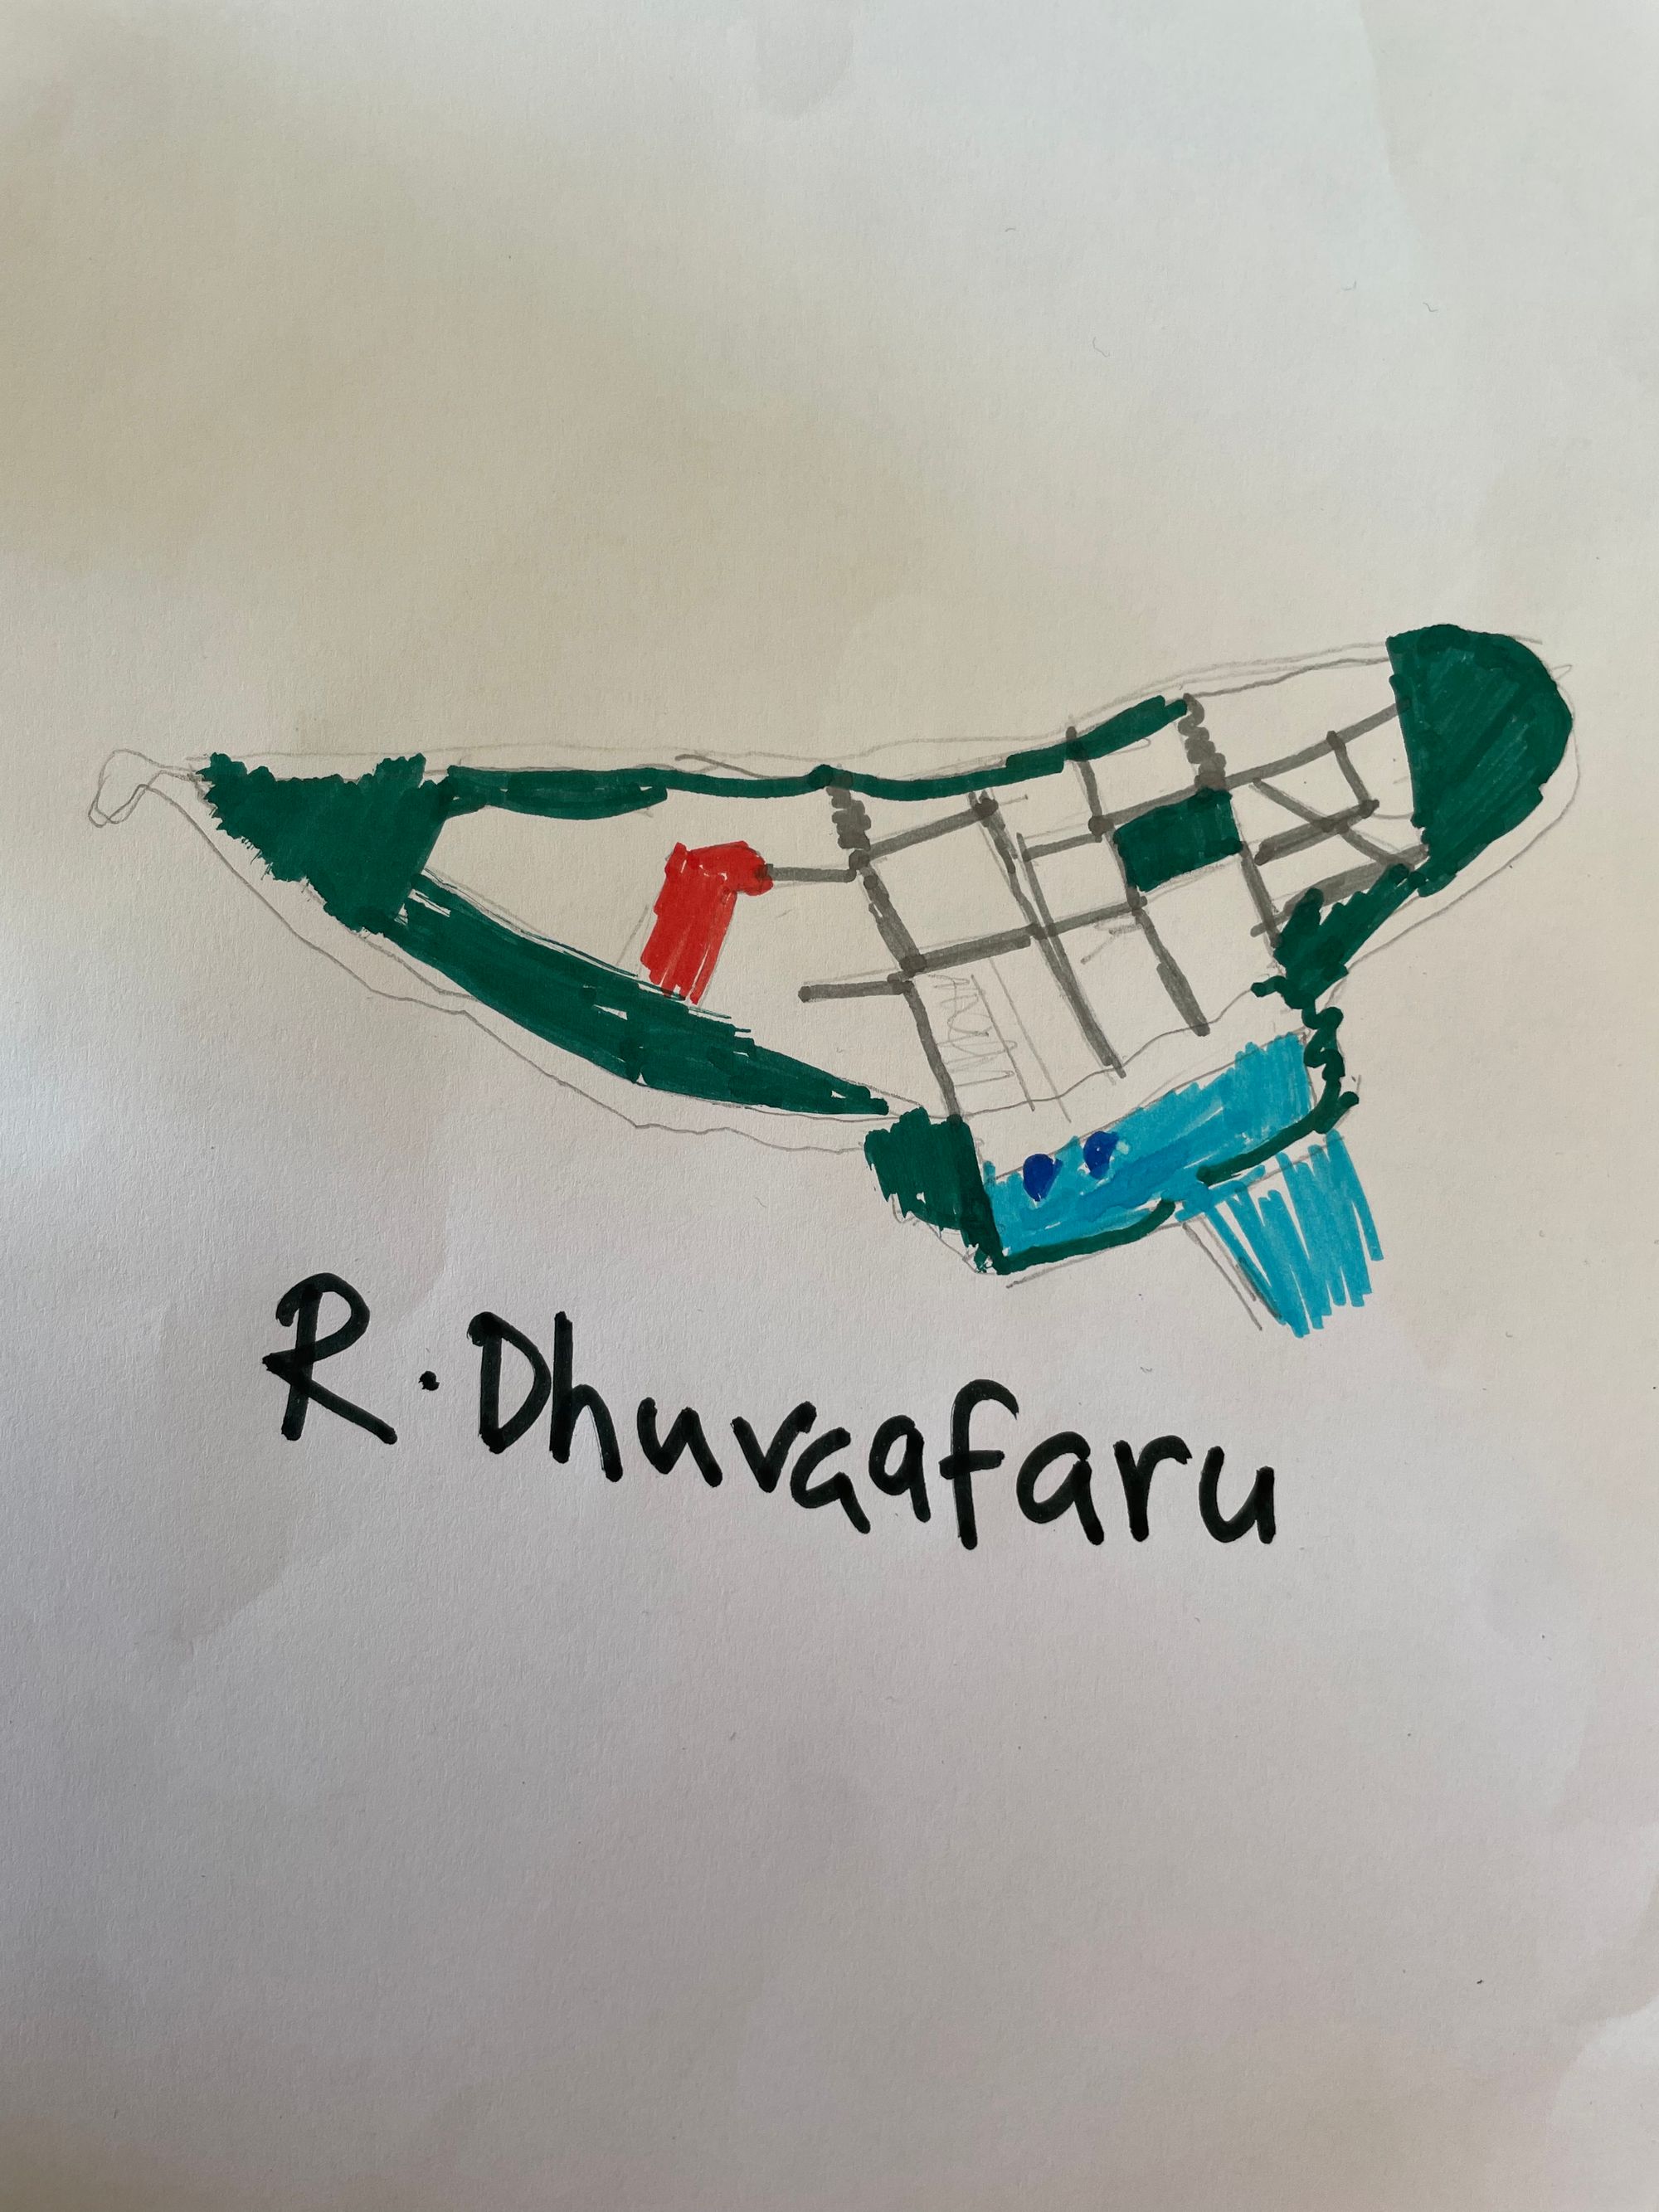 Dhuvaafaru